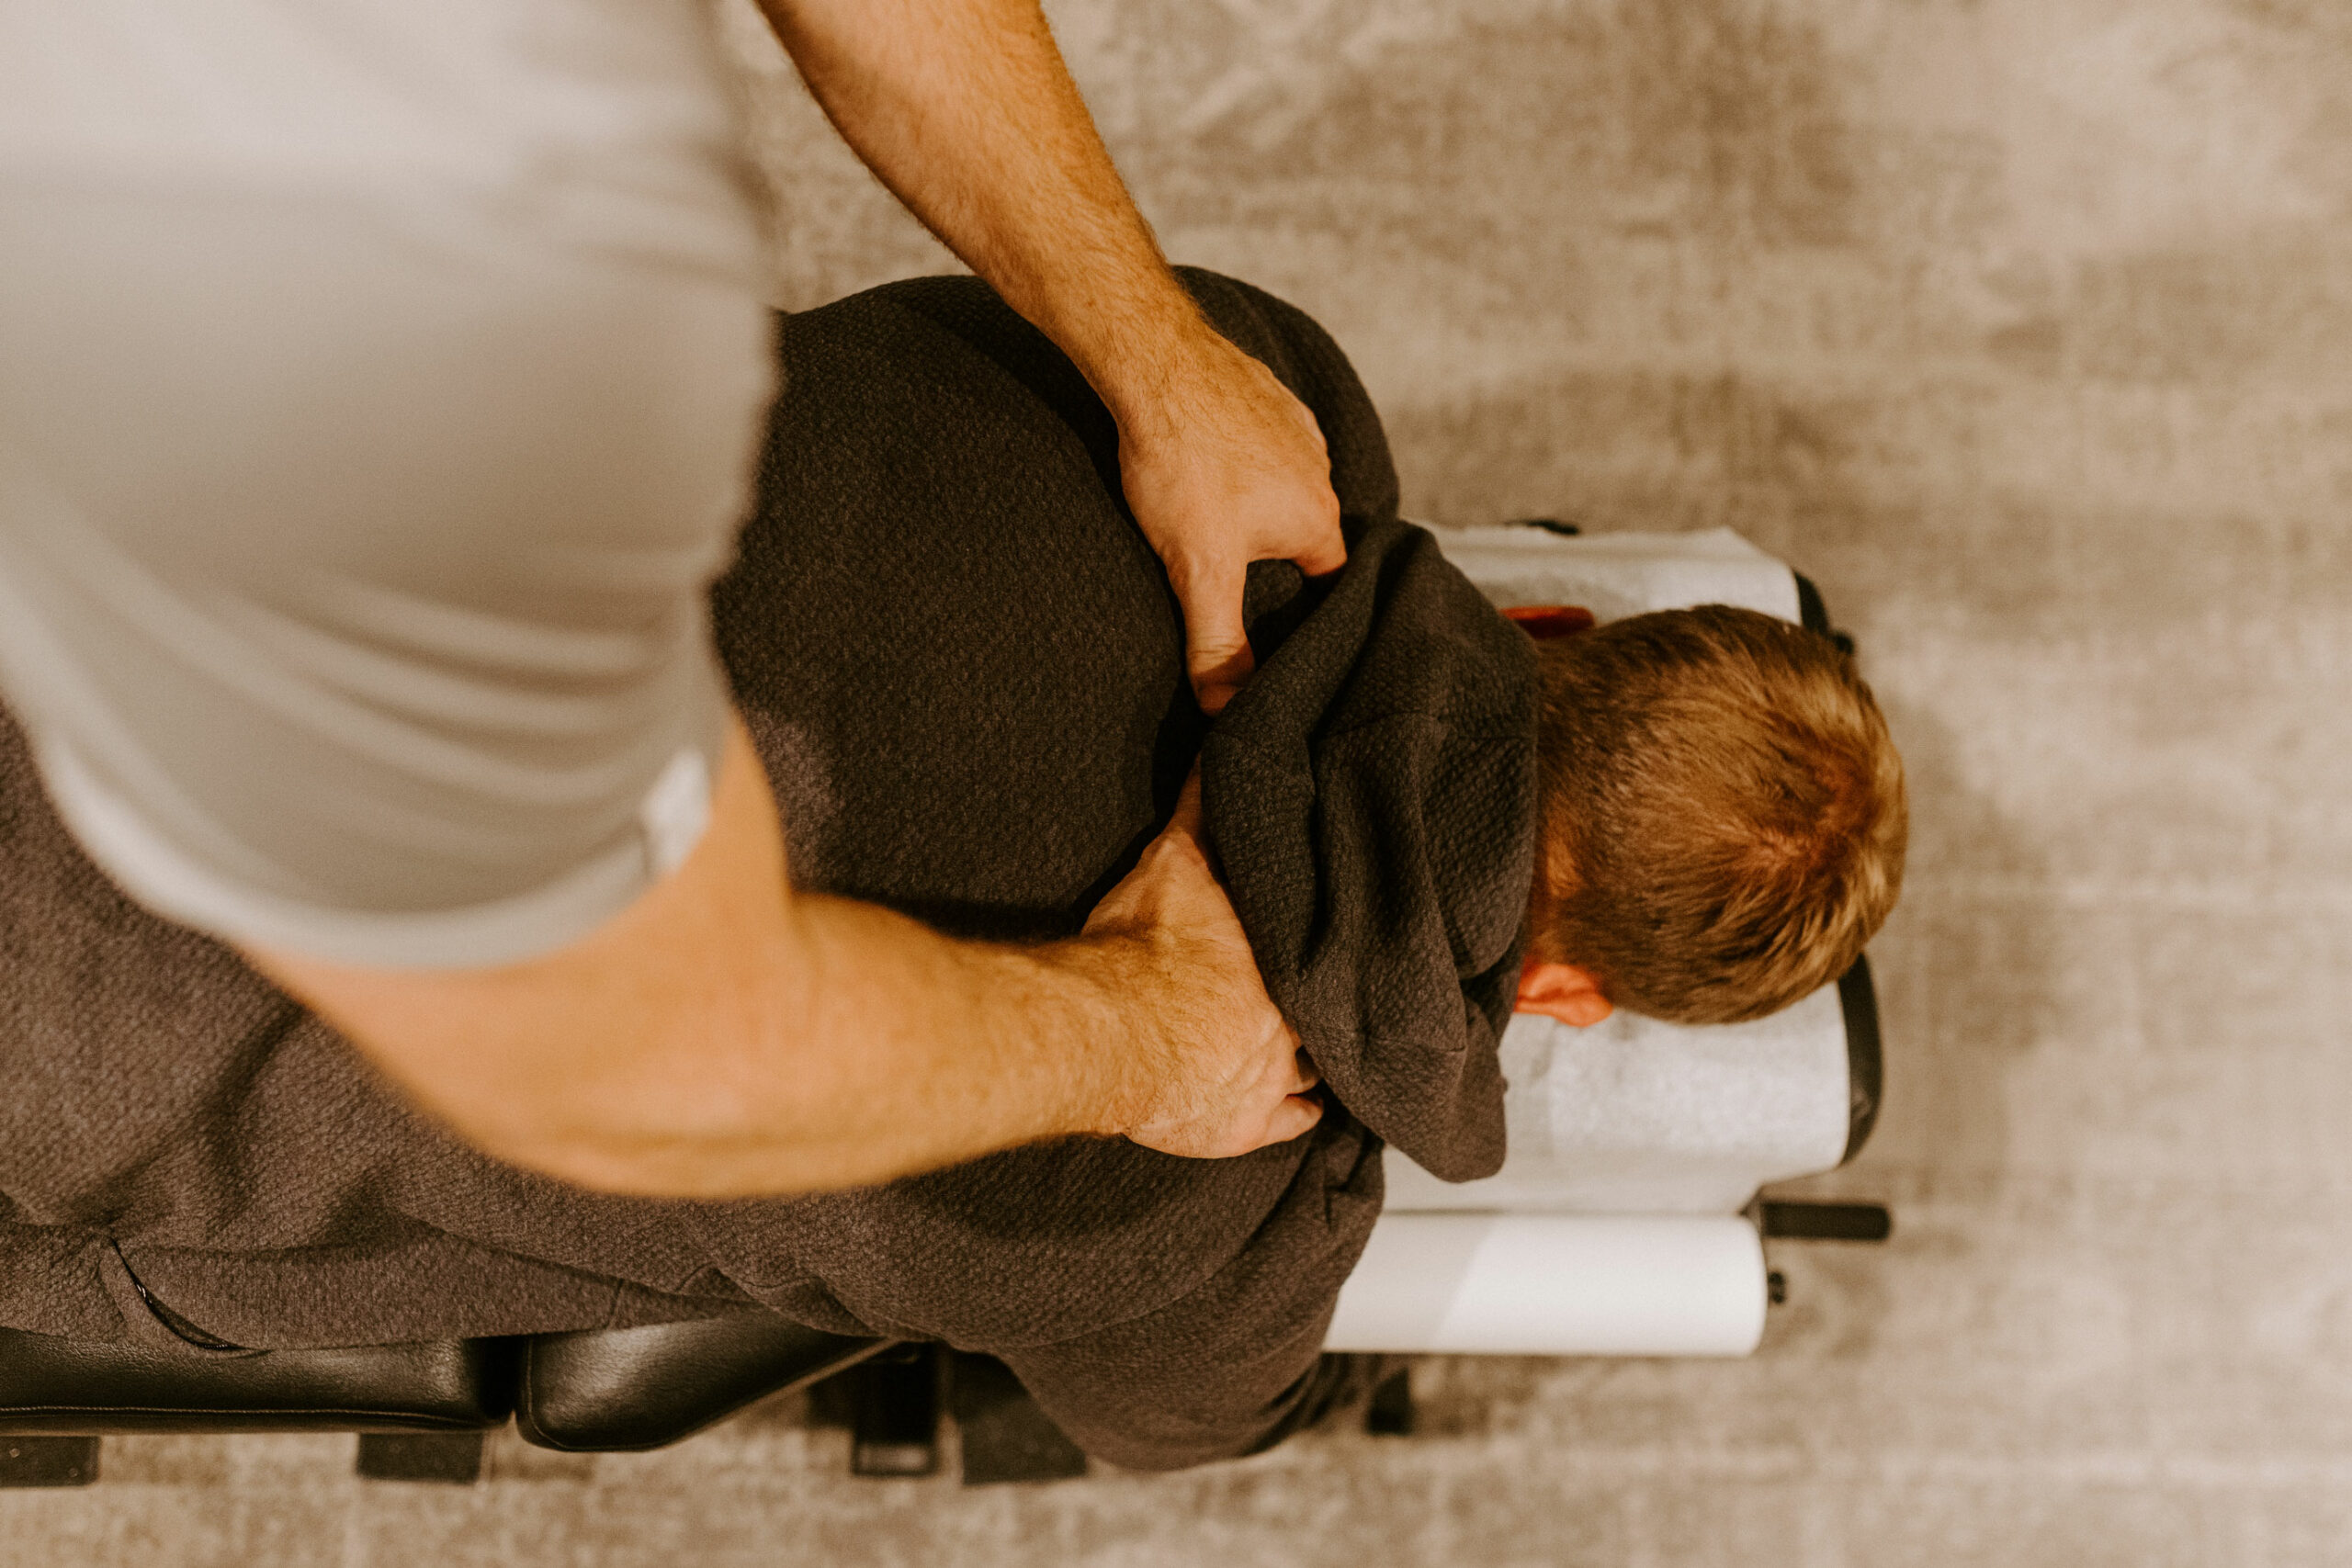 panoramic shot of chiropractor massaging neck of man on grey